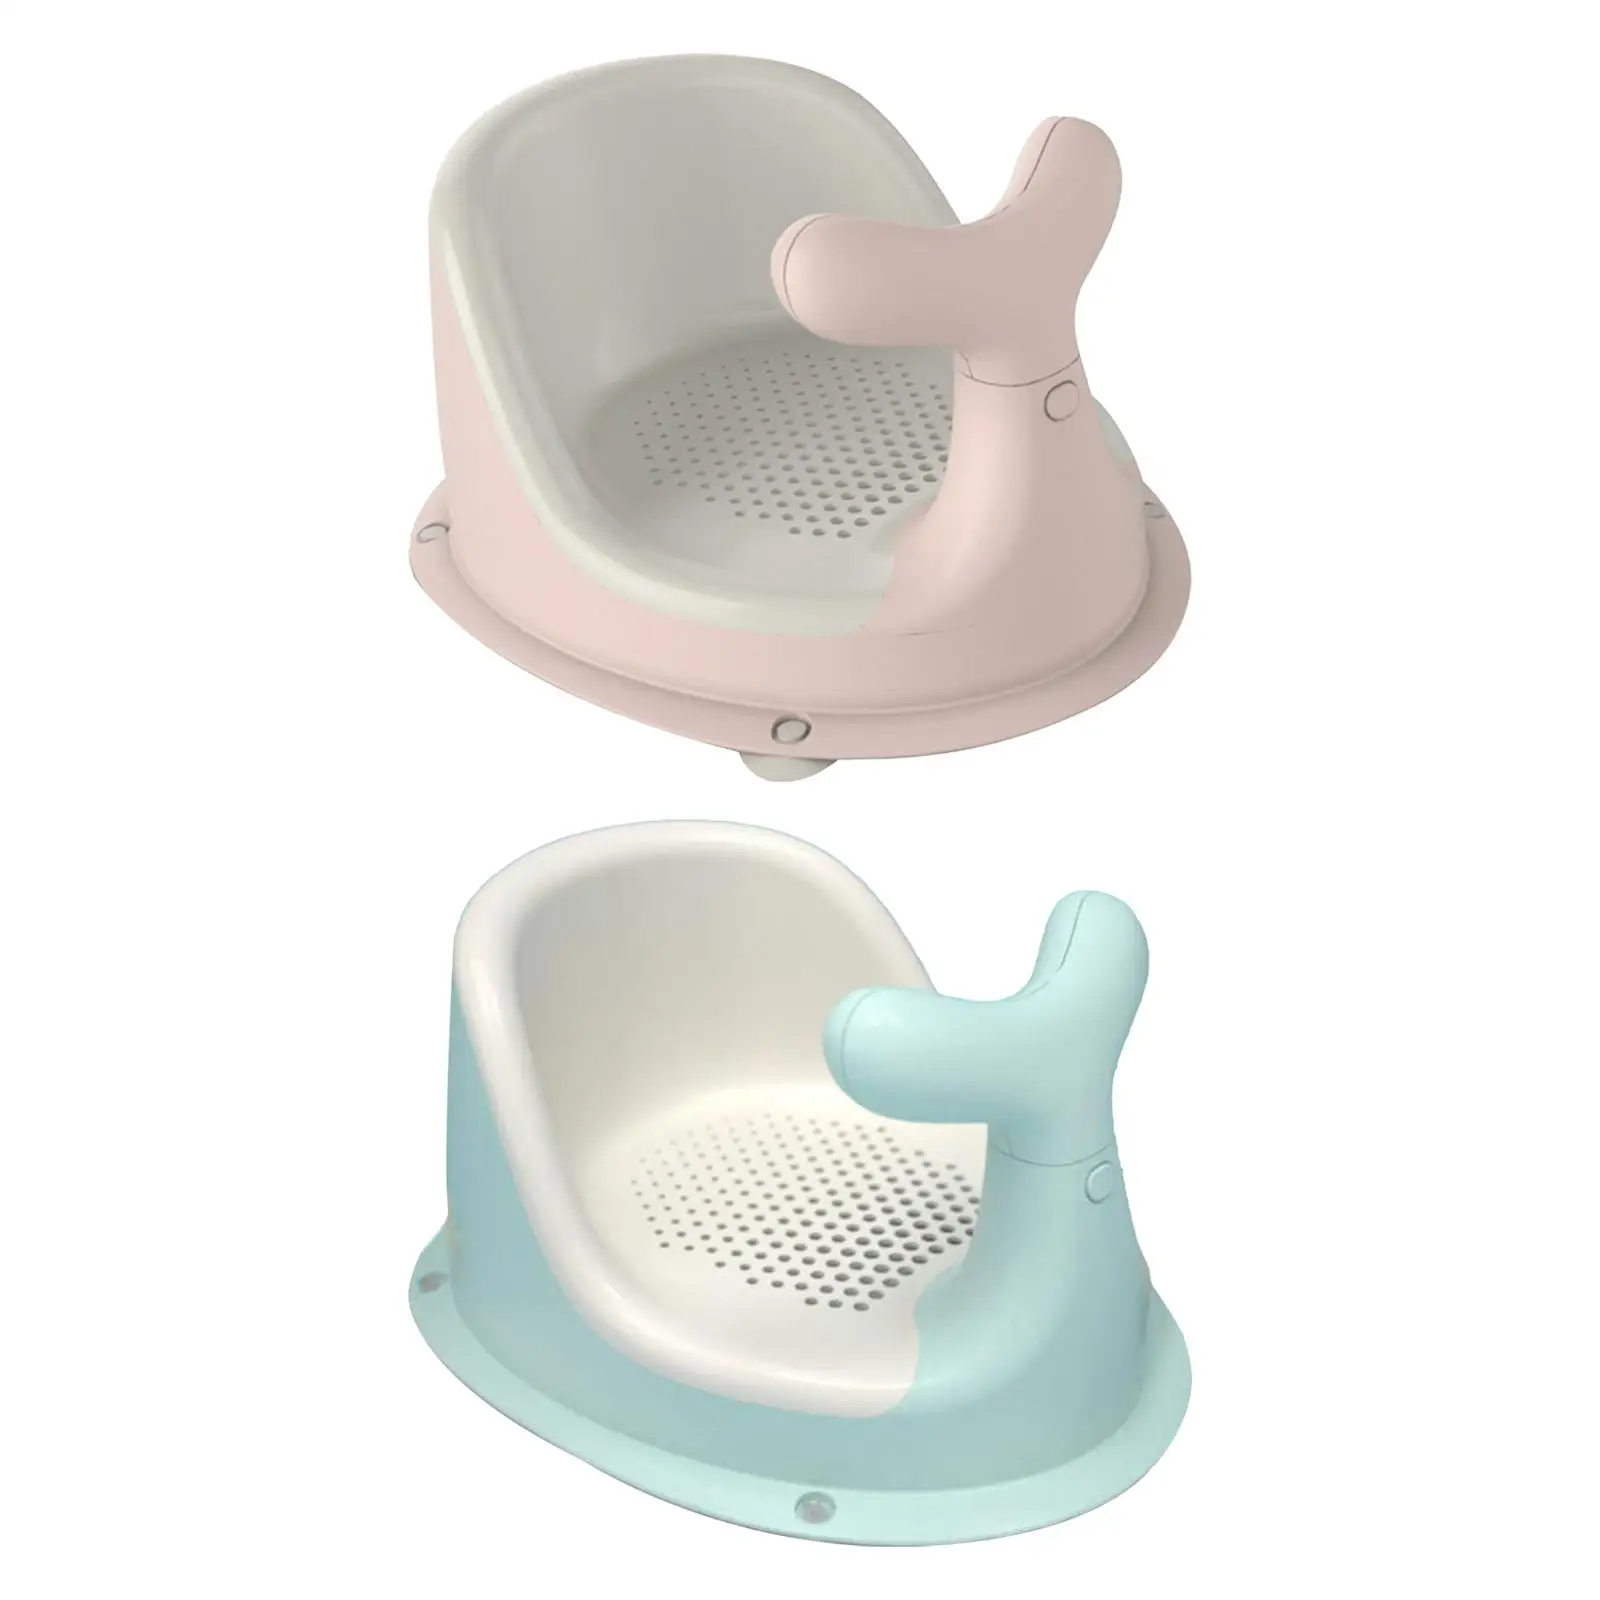 Infant Shower Chair Portable Shower Stool Newborn Bath Seat for Bathroom